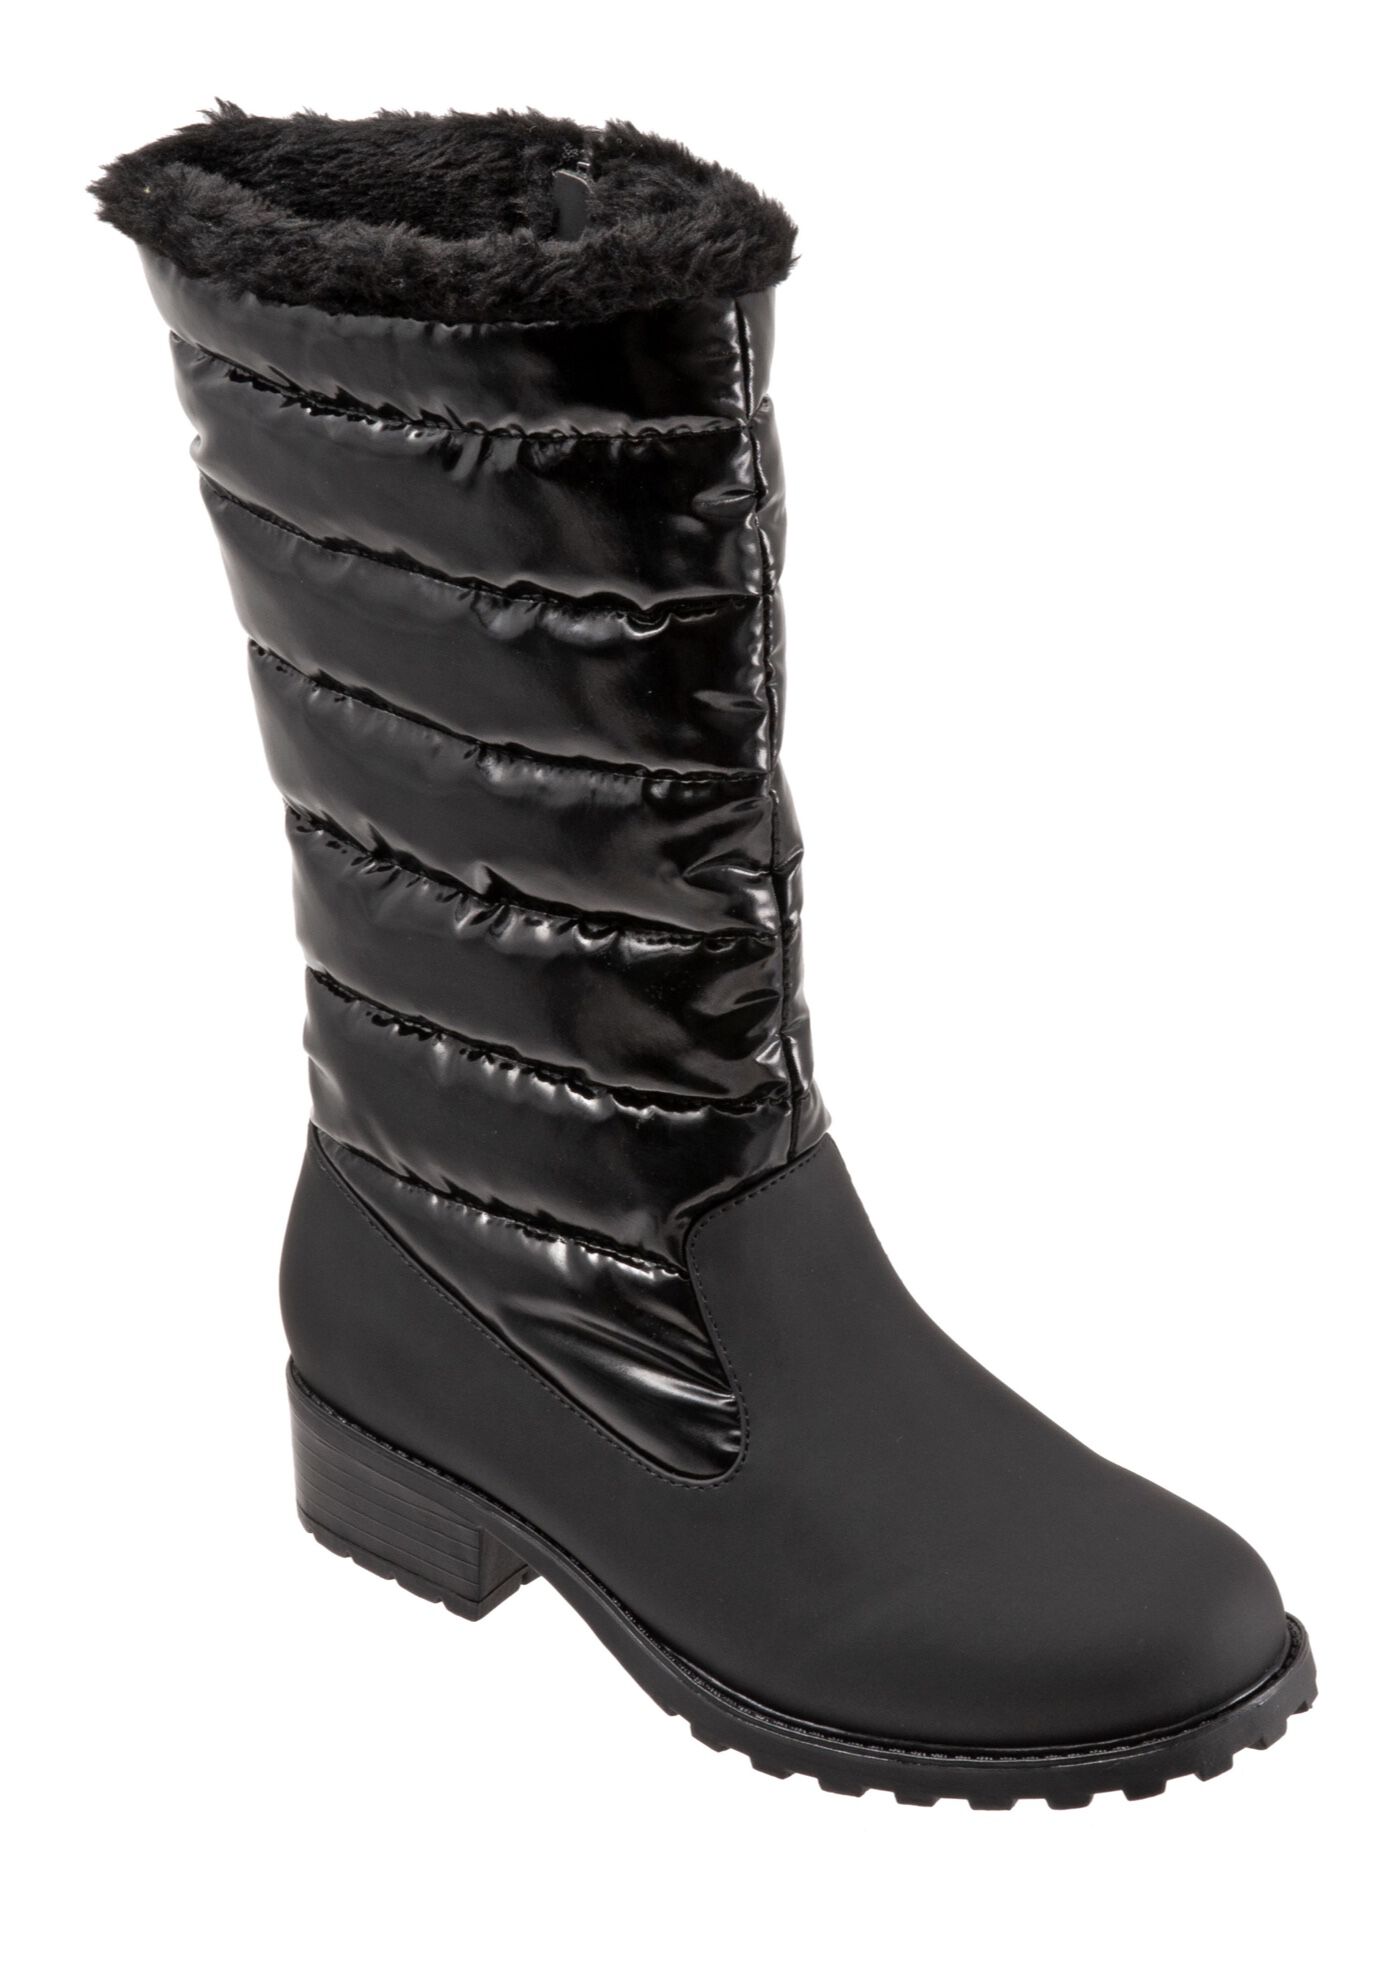 Extra Wide Width Women's Benji High Boot by Trotters in Black Black (Size 6 WW)